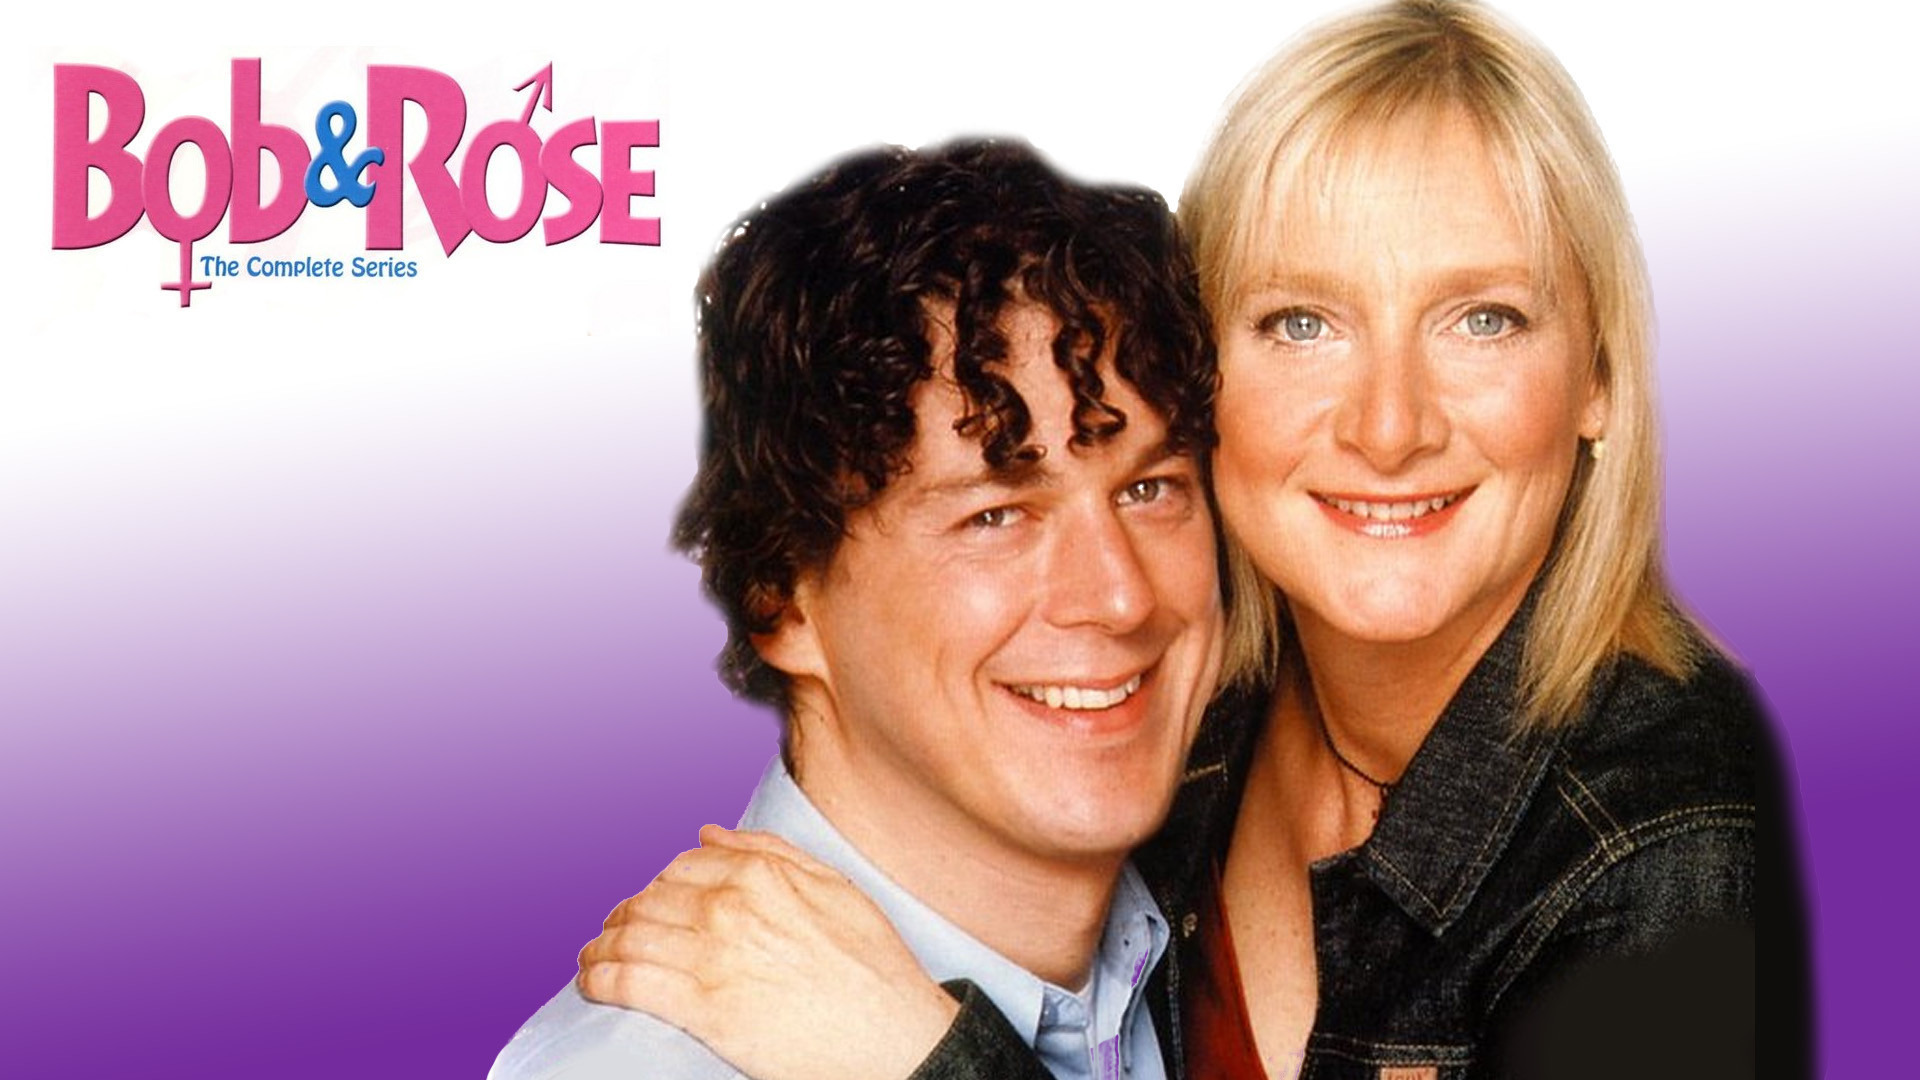 Show Bob and Rose